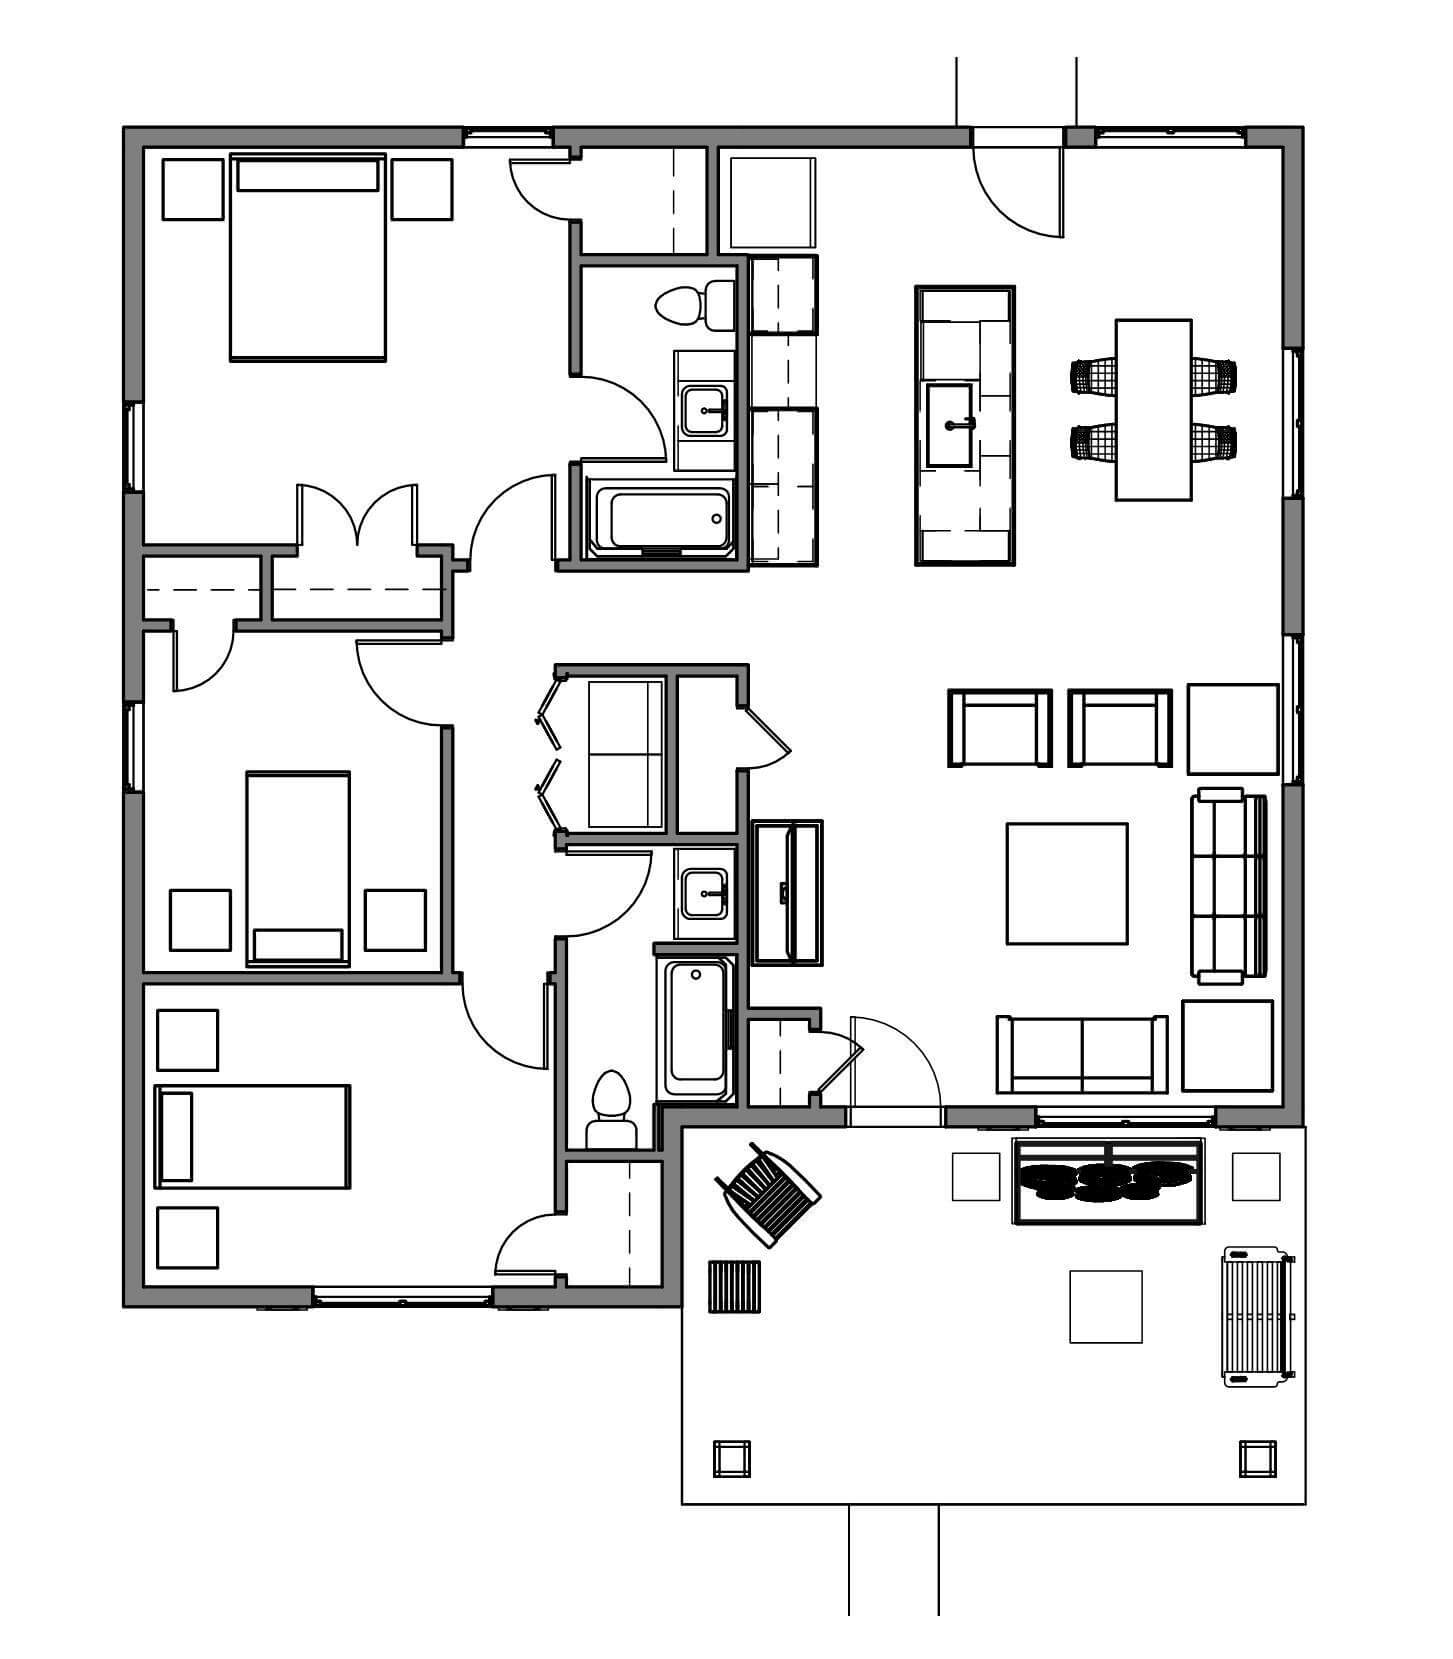 floor plan illustration of a home